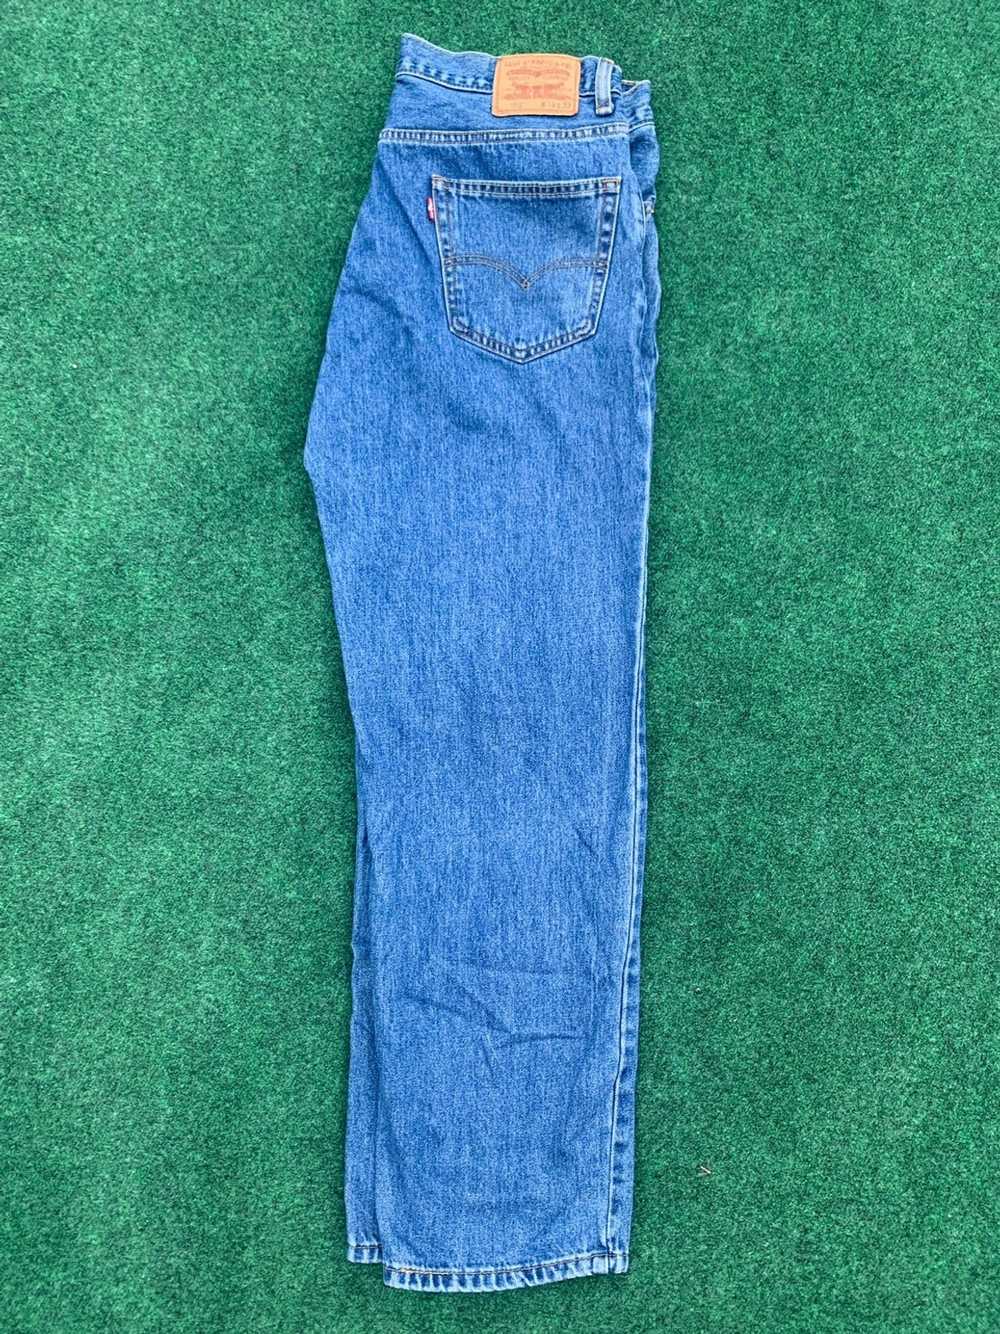 Levi's Vintage Levi’s 550 dark wash jeans - image 2